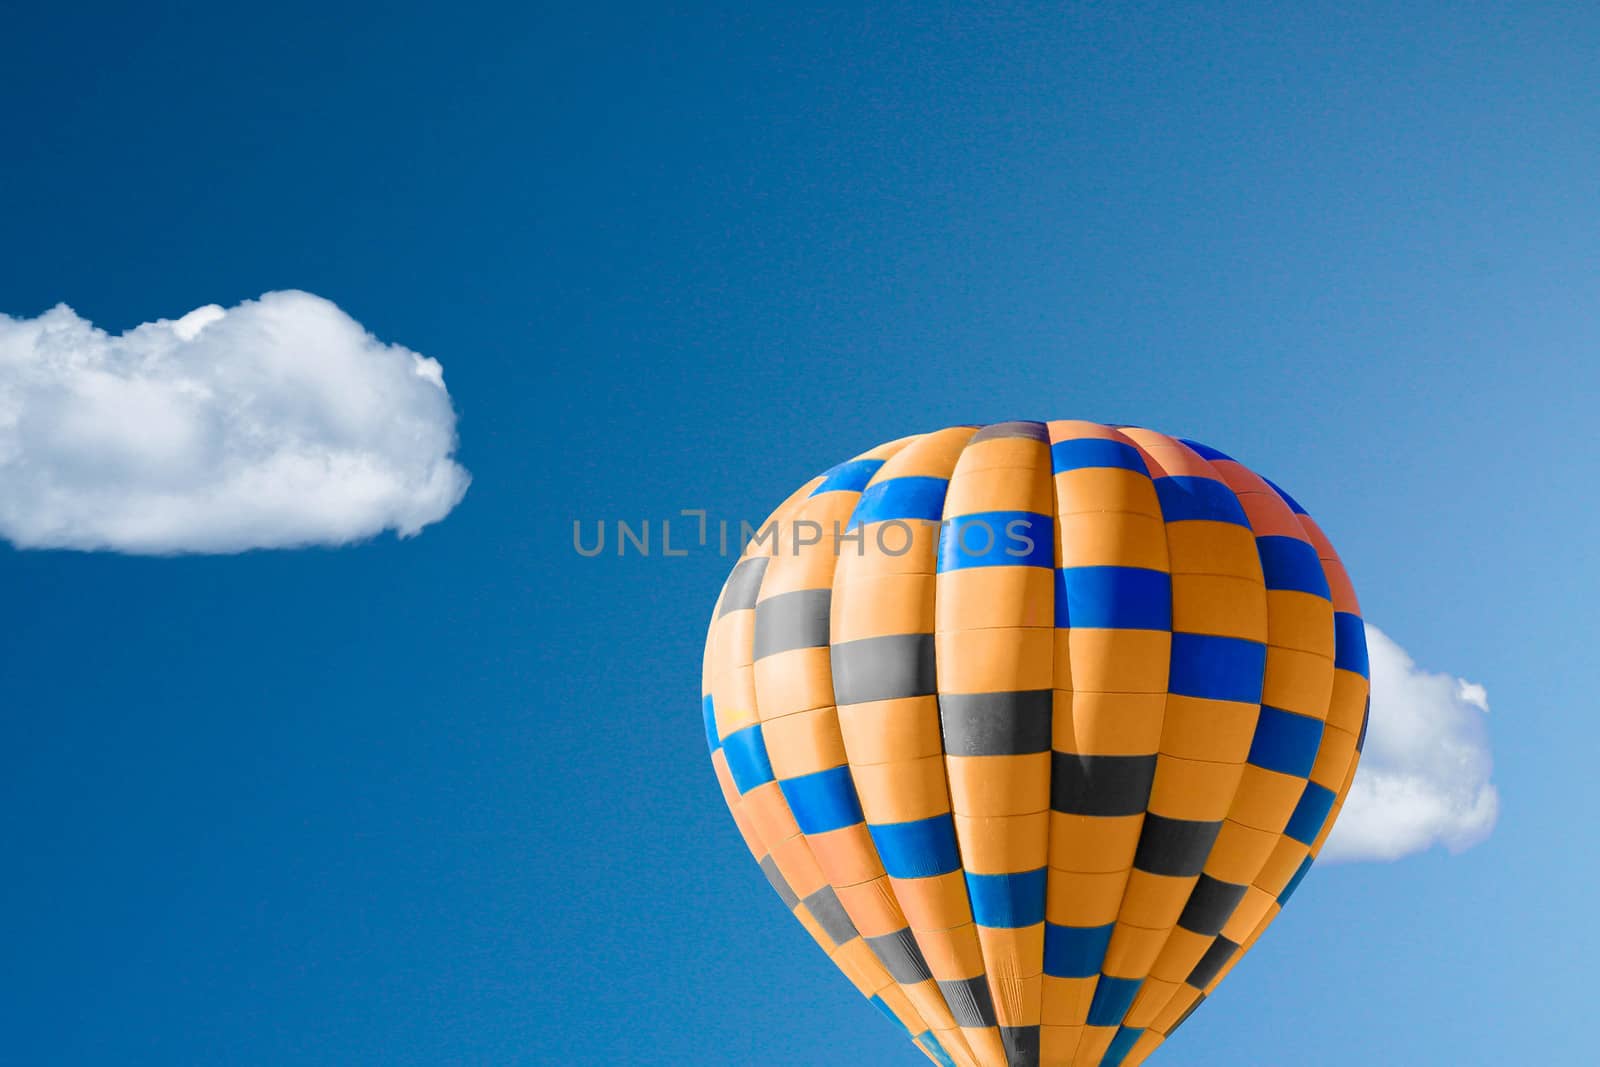 Hot air balloon against brilliant blue sky by shutswis